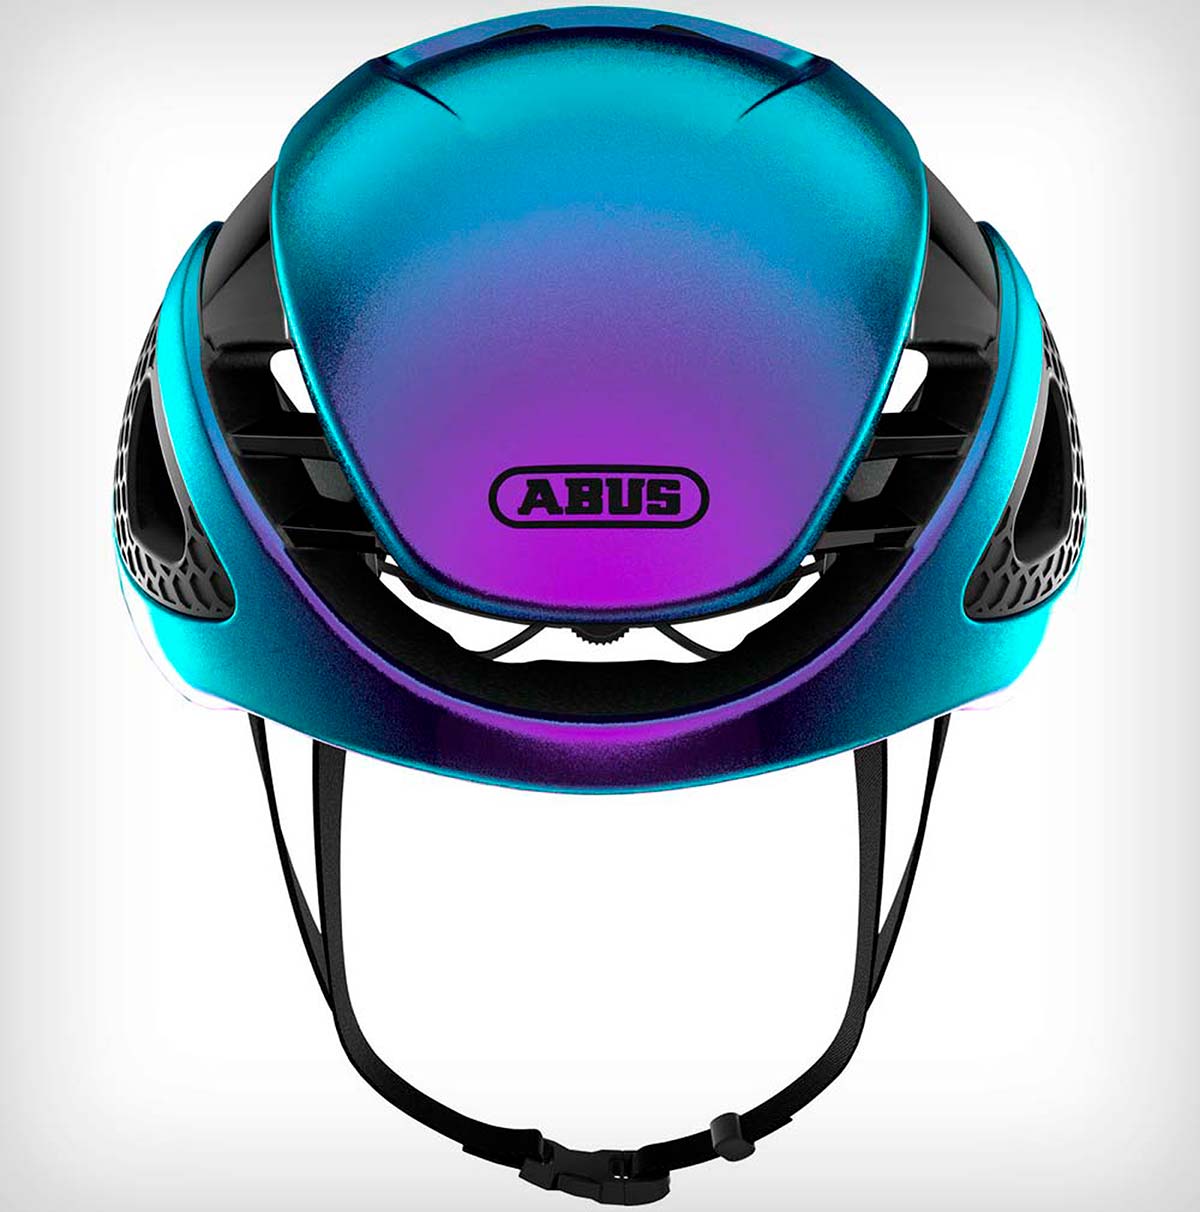 En TodoMountainBike: El casco ABUS GameChanger recibe dos exclusivos colores